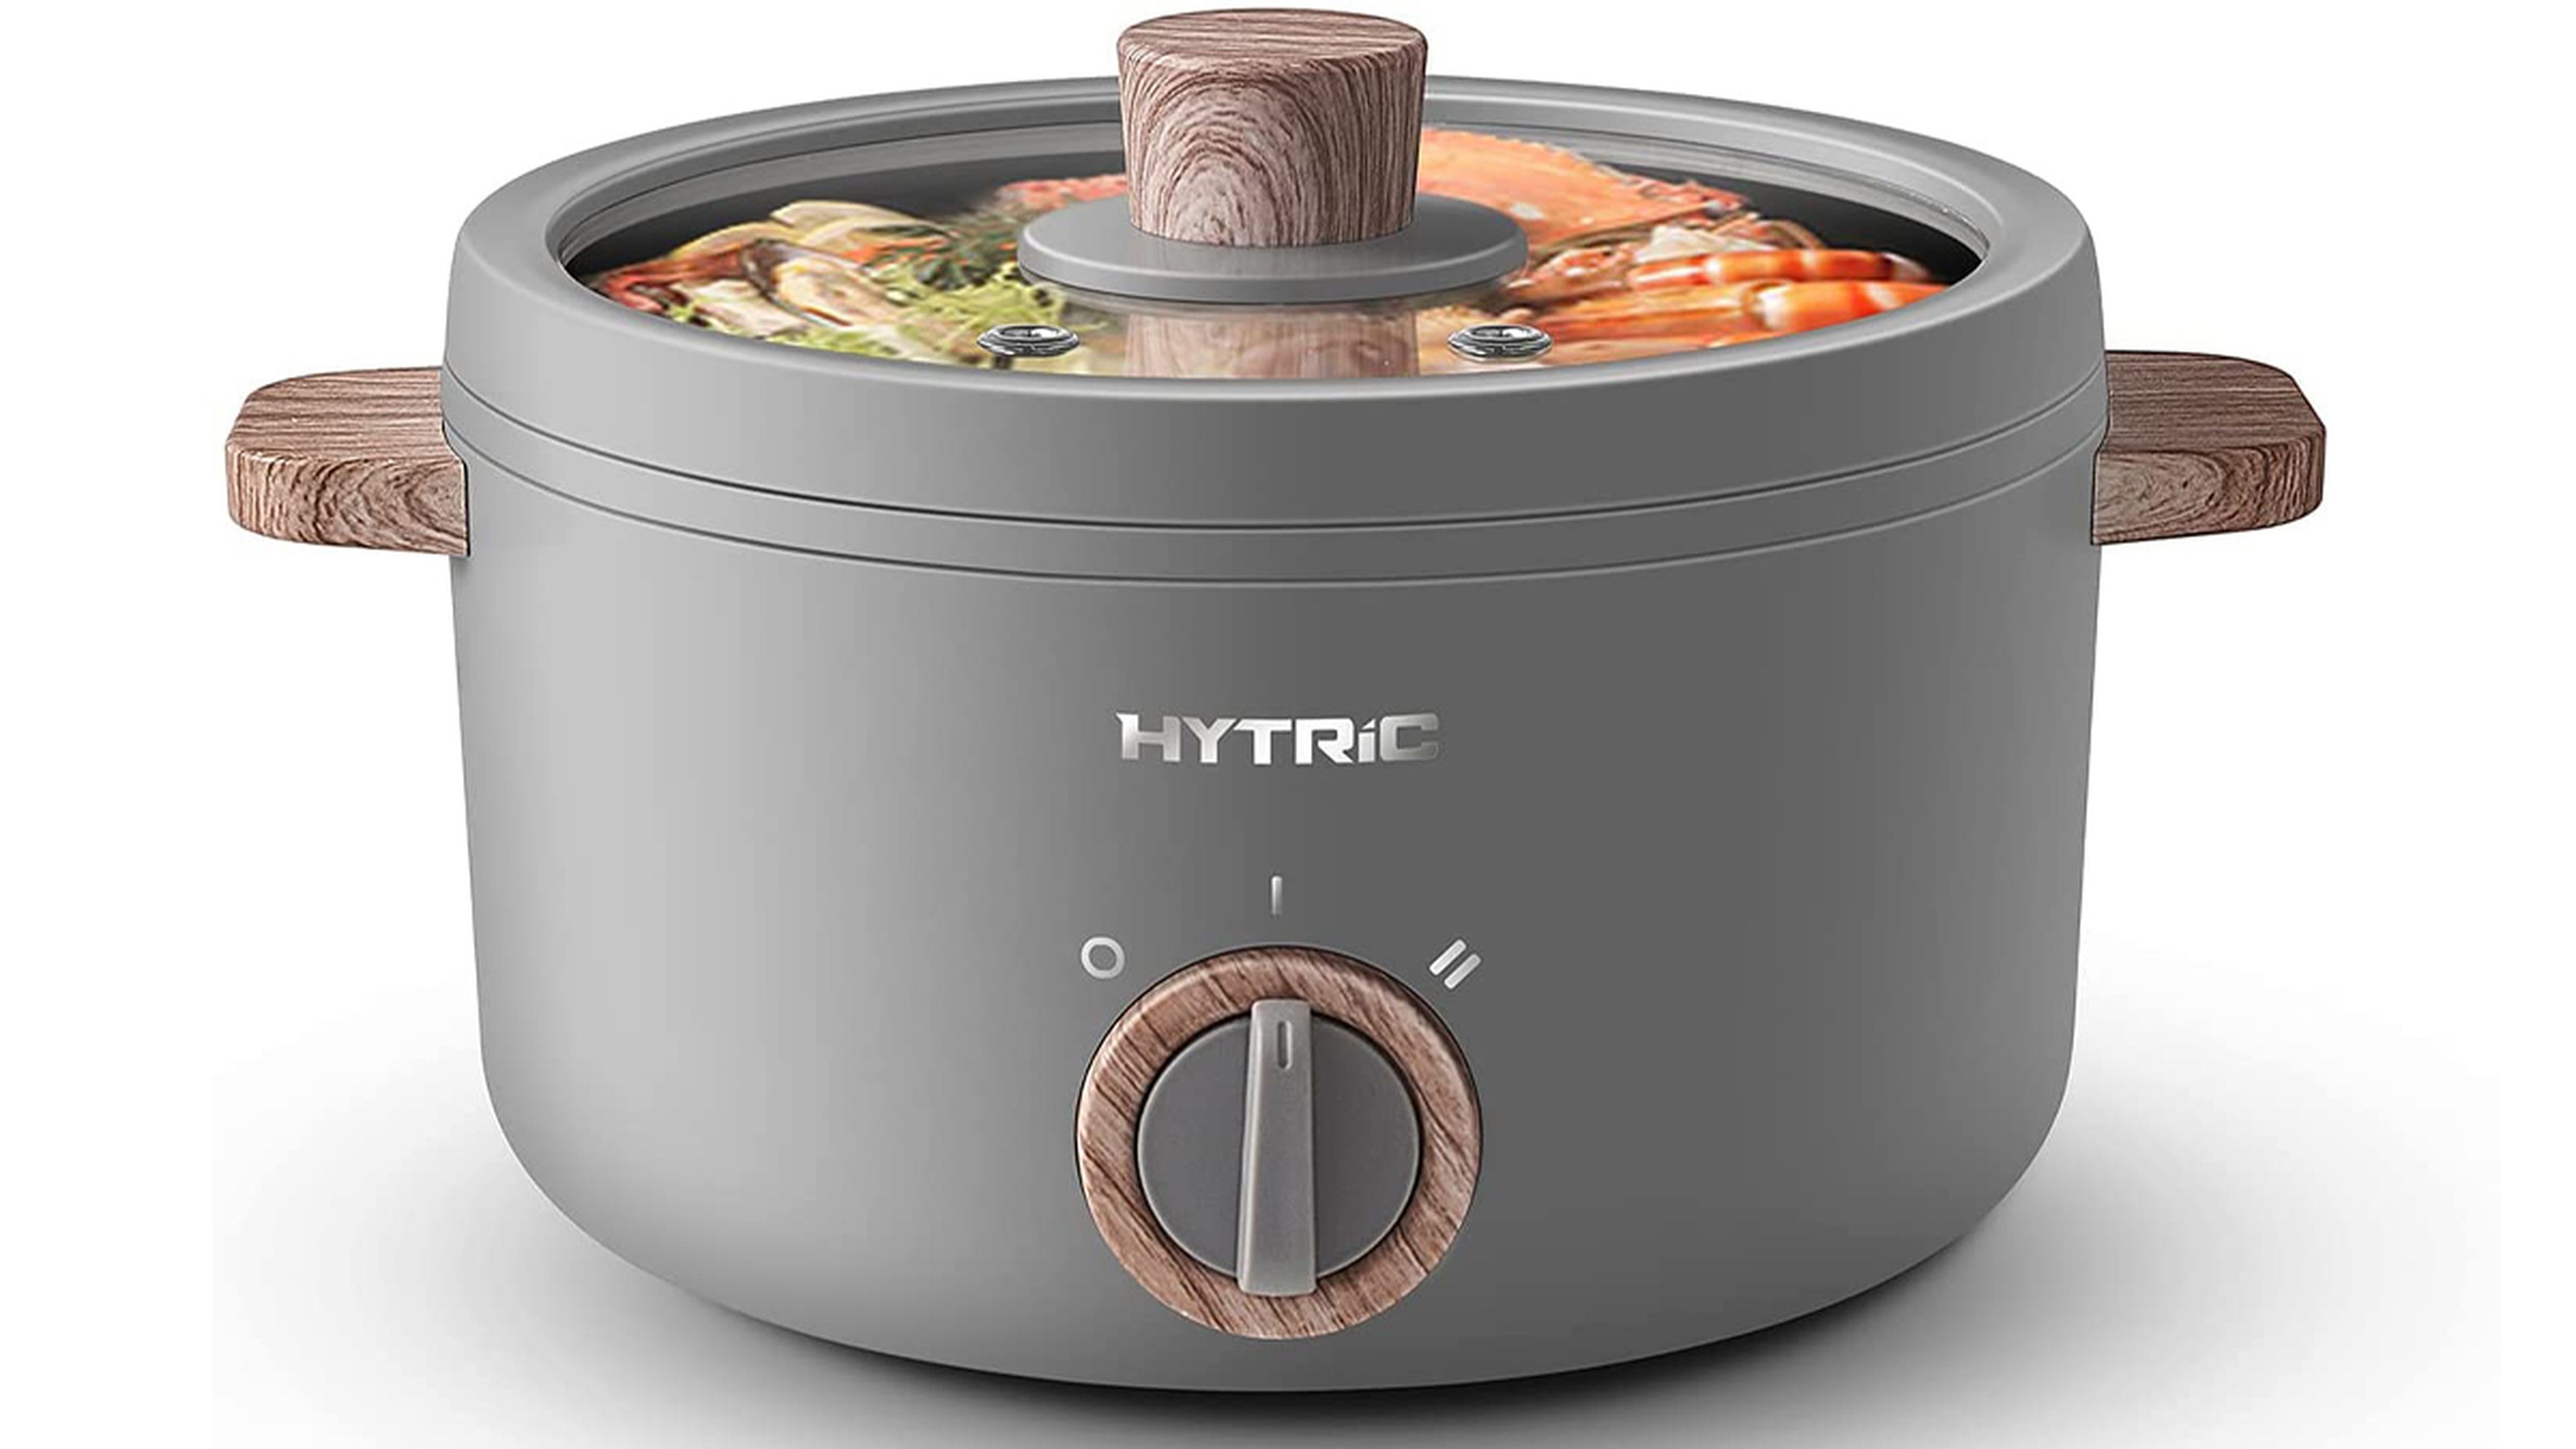 Hytric Hot Pot